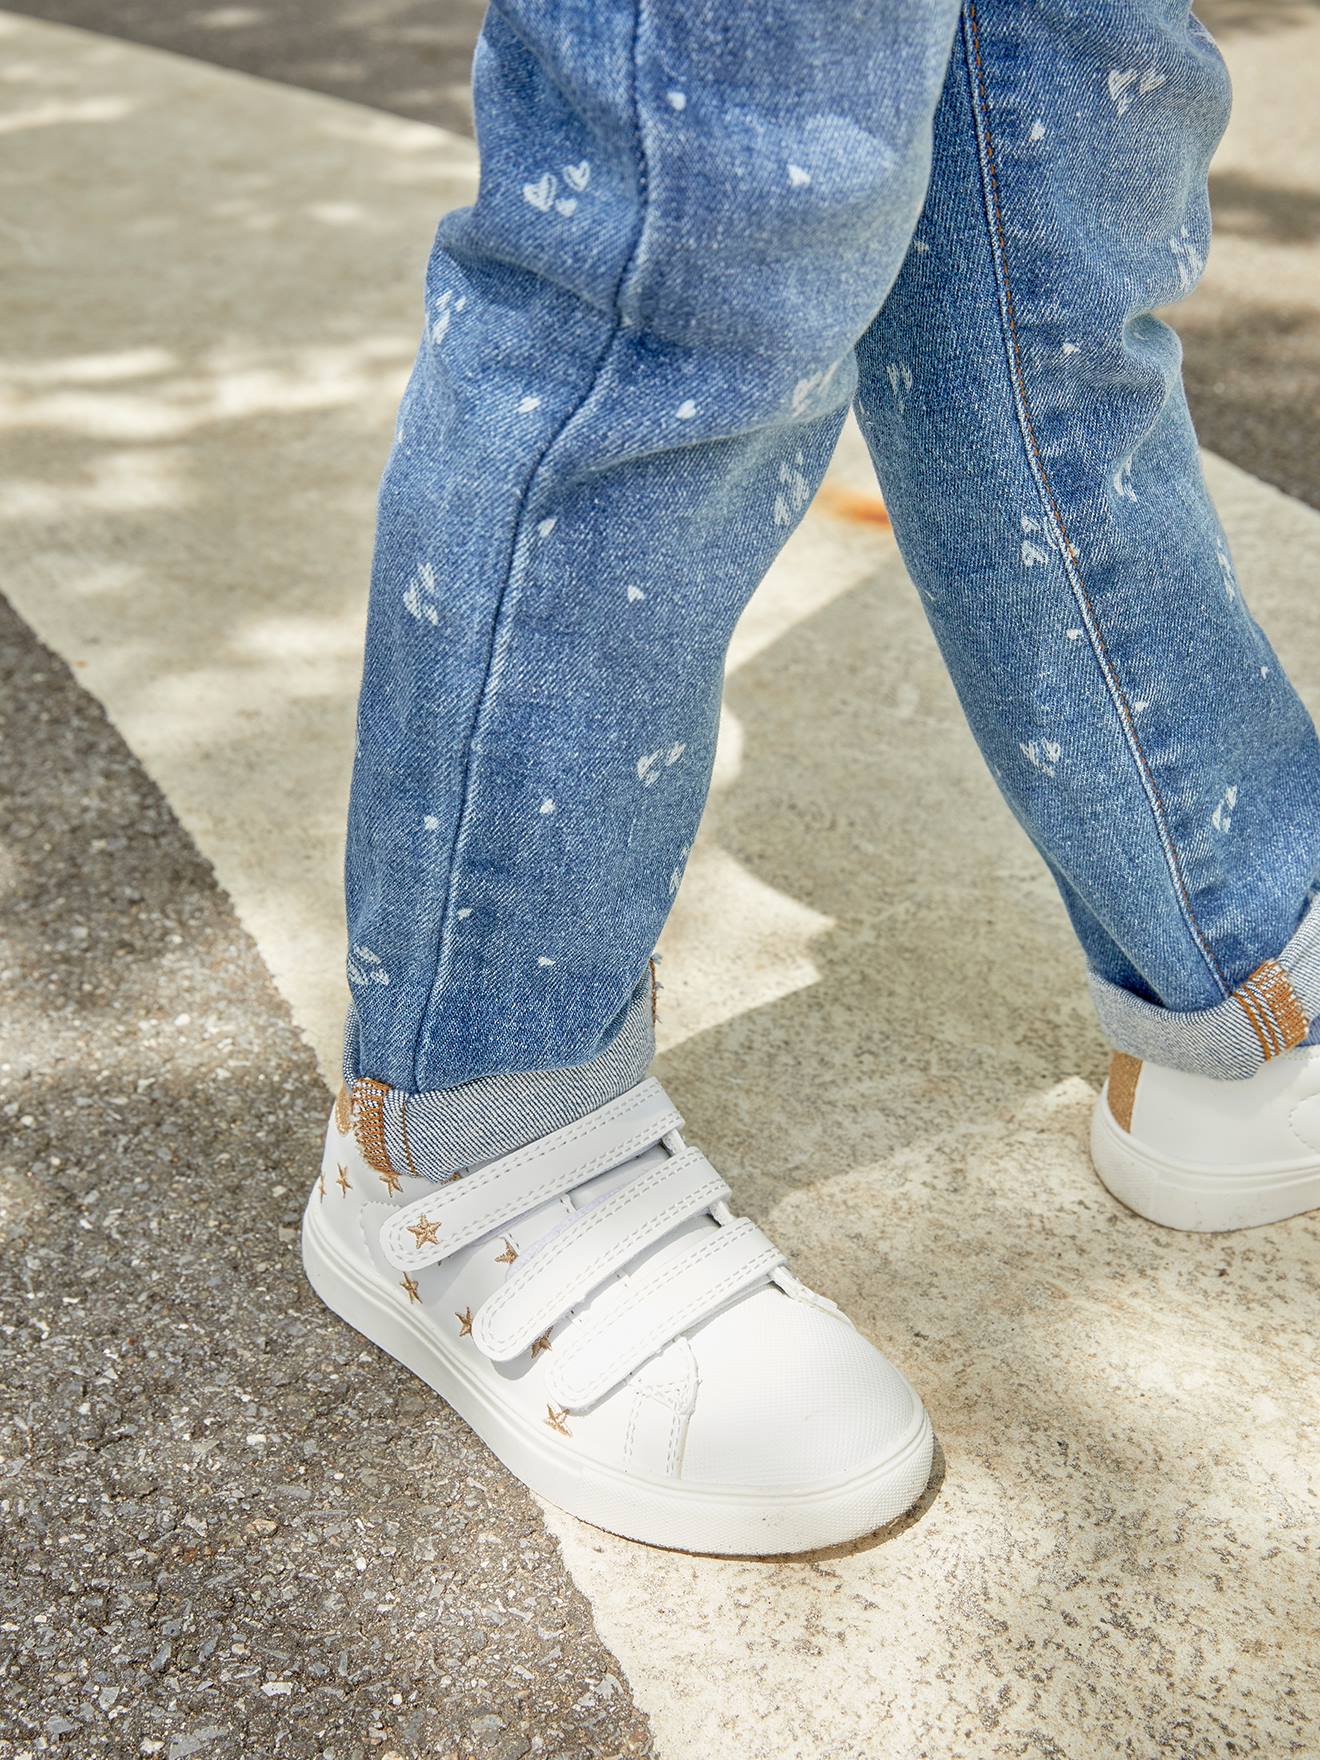 Klittenband sneakers meisje wit met sterretjesprint